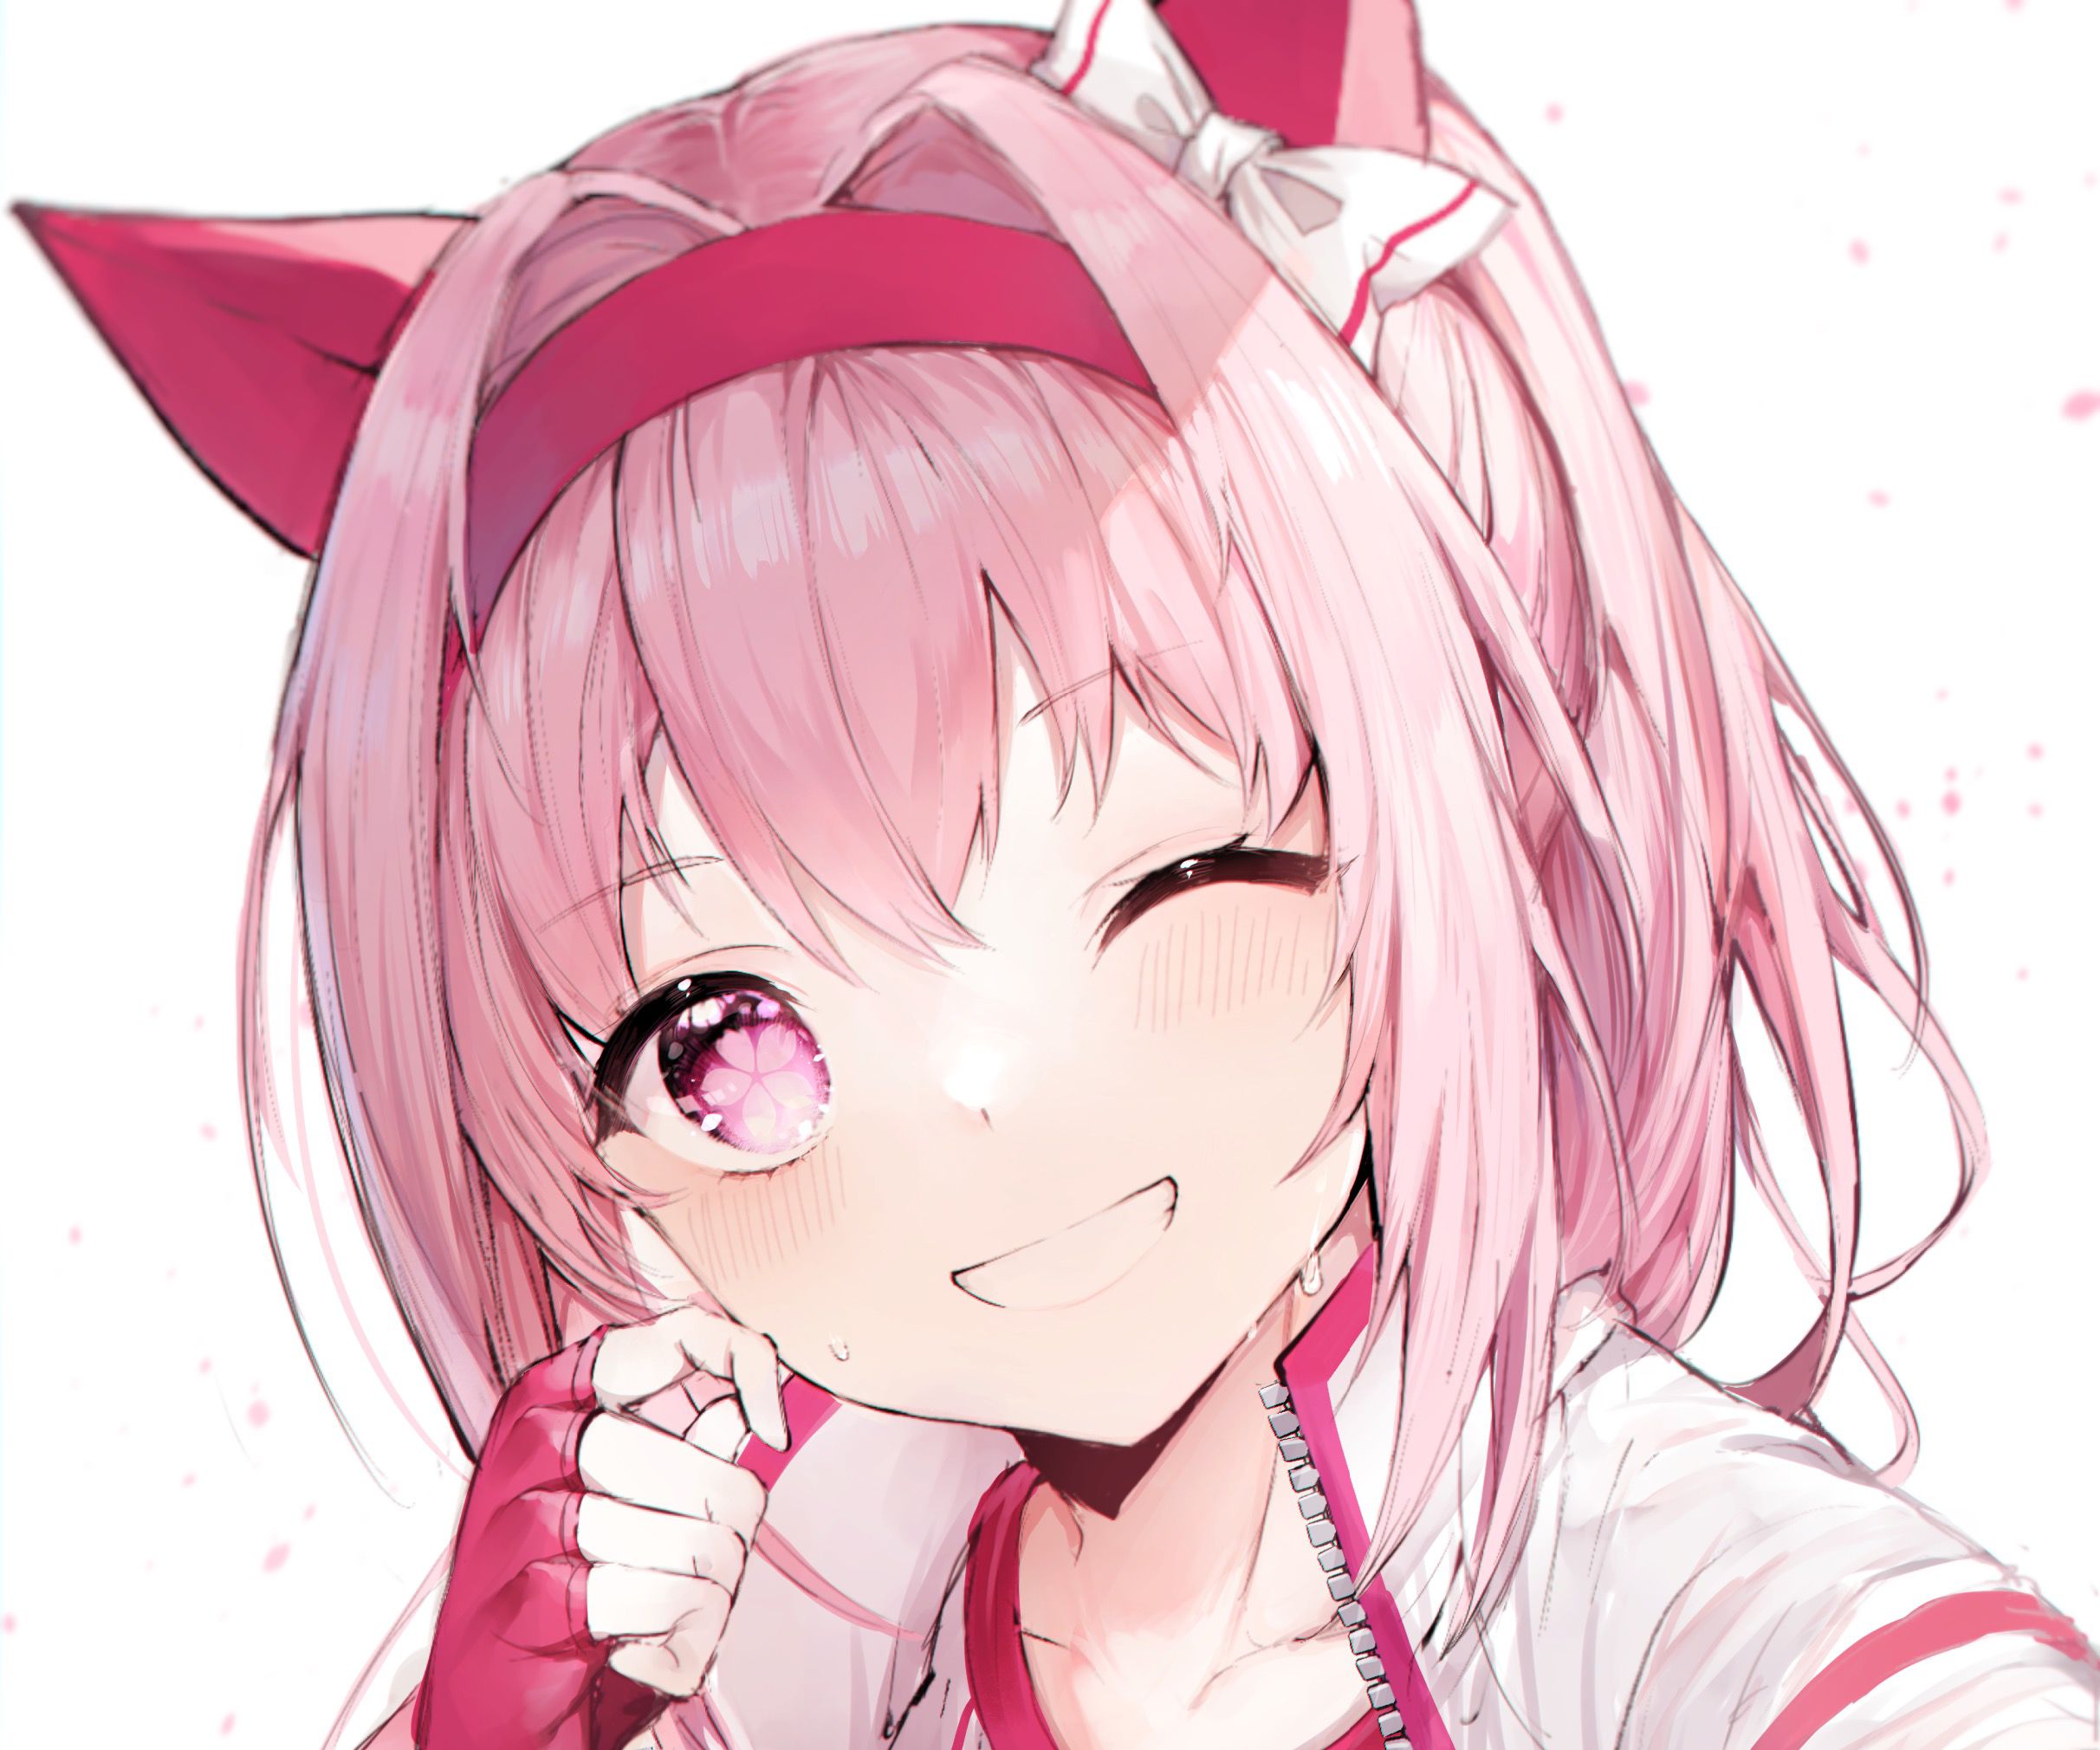 Anime girl wink by mysterionz on DeviantArt